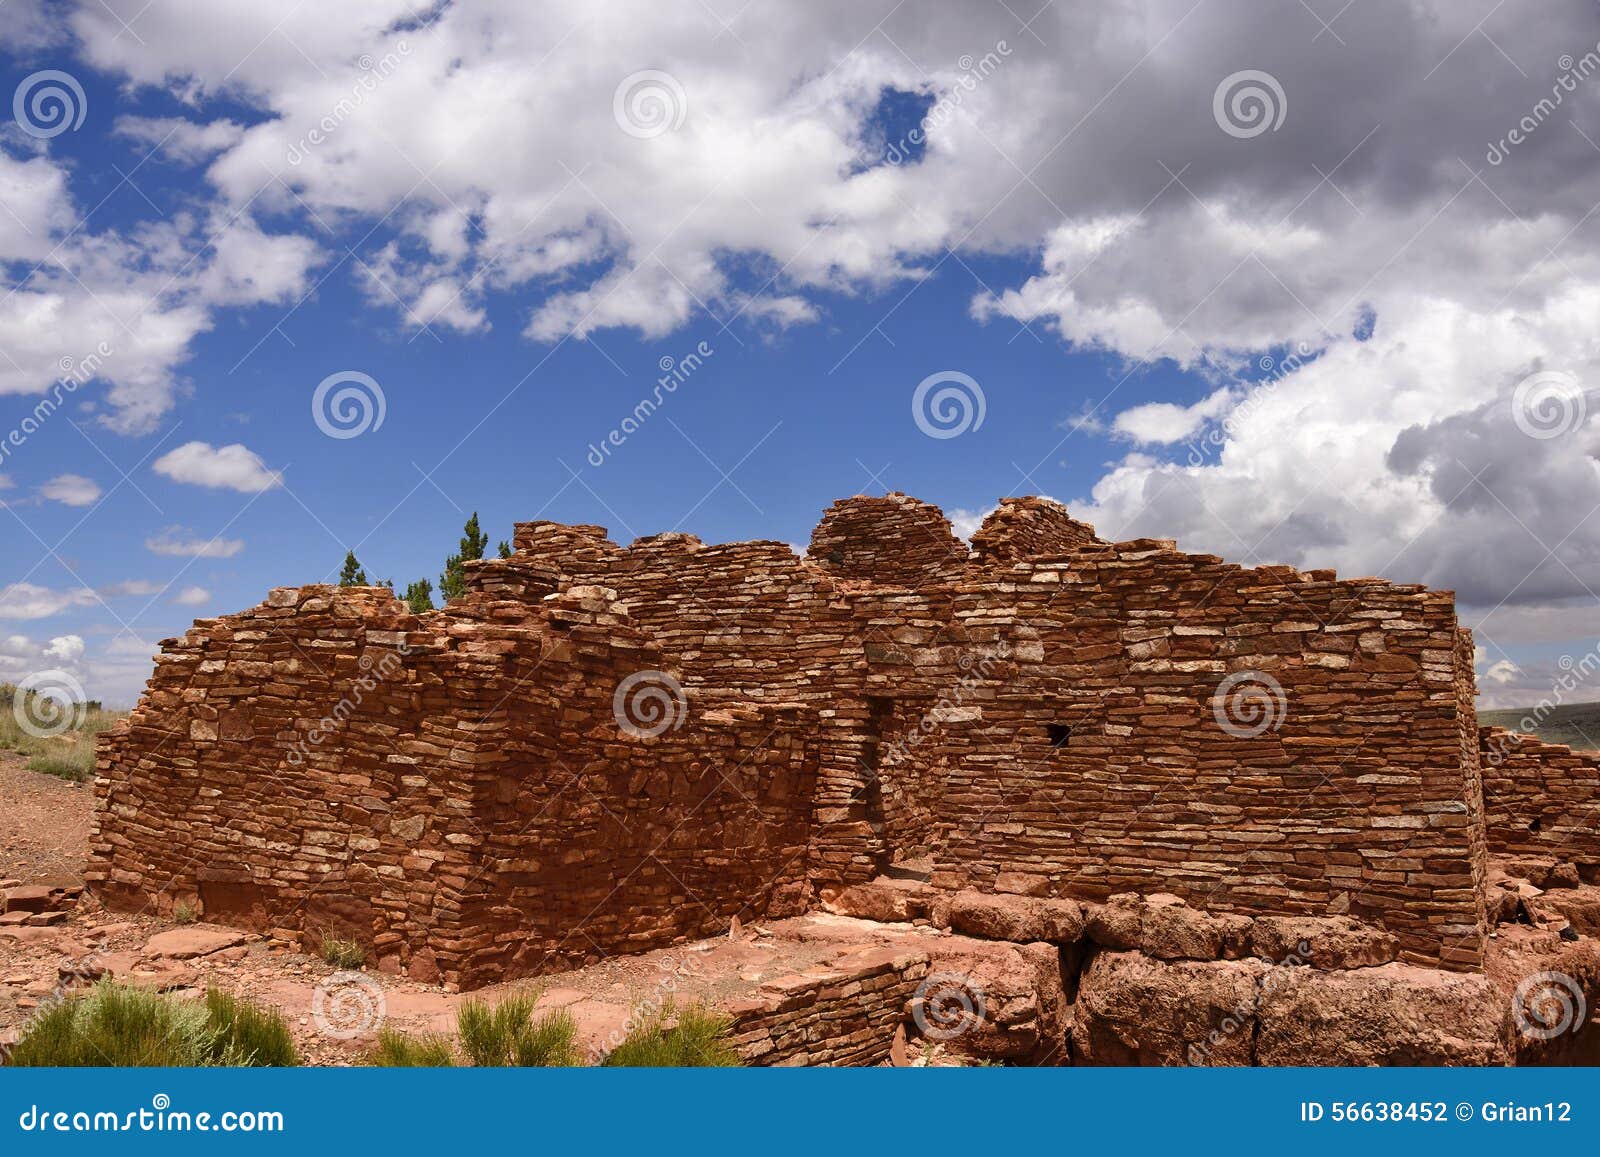 ancestral puebloan ruins